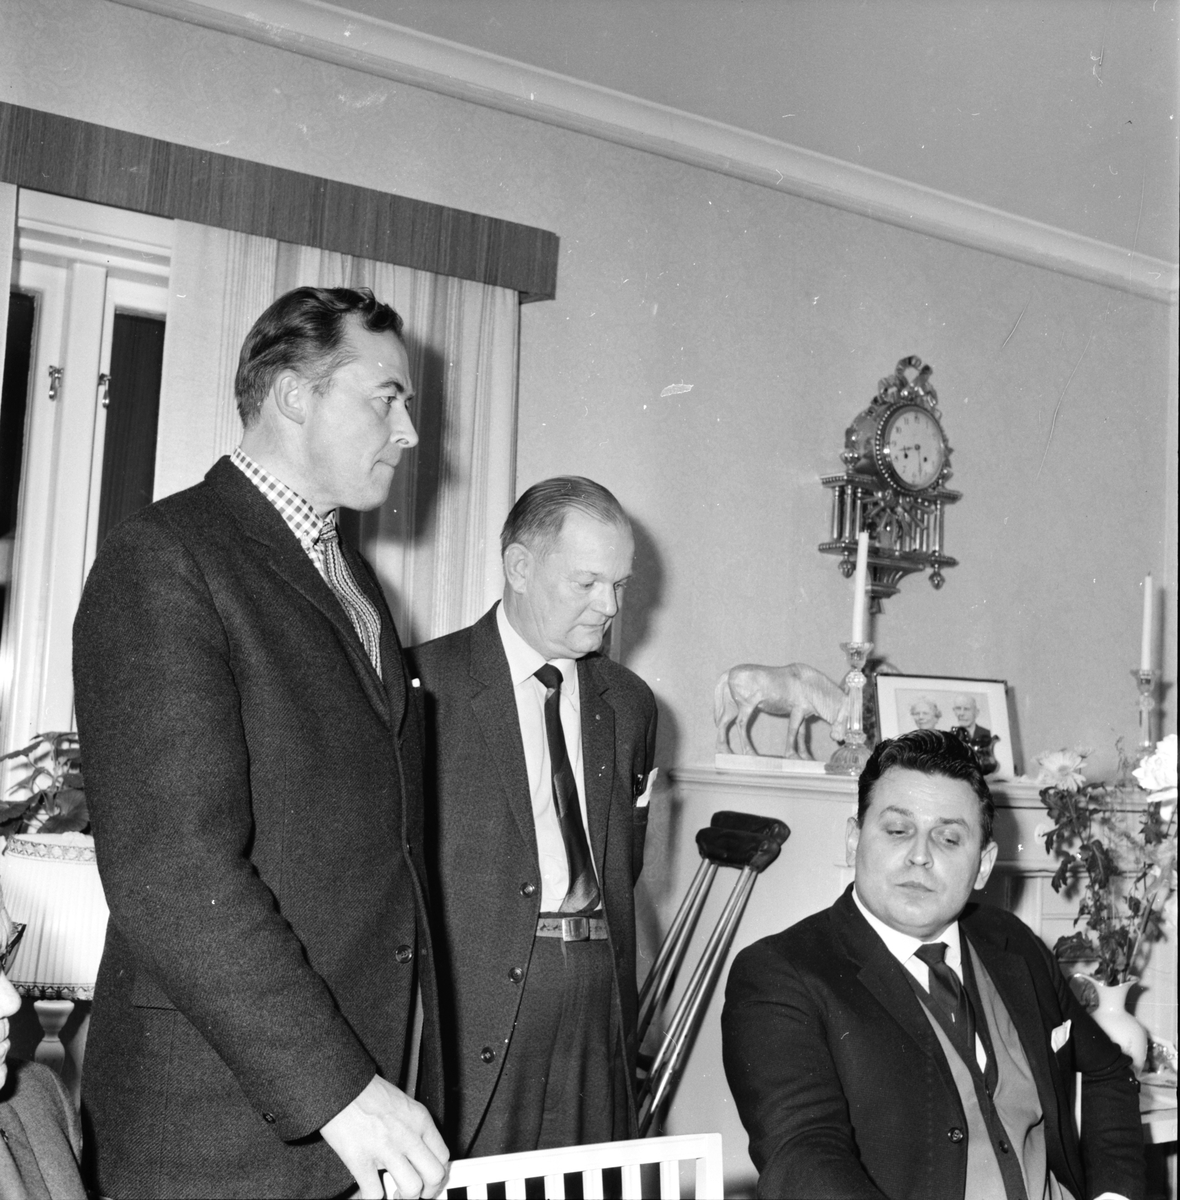 Hälsingeklippan DVR,
Får en check på 3000 kr av Lion i Bollnäs,
16 December 1964